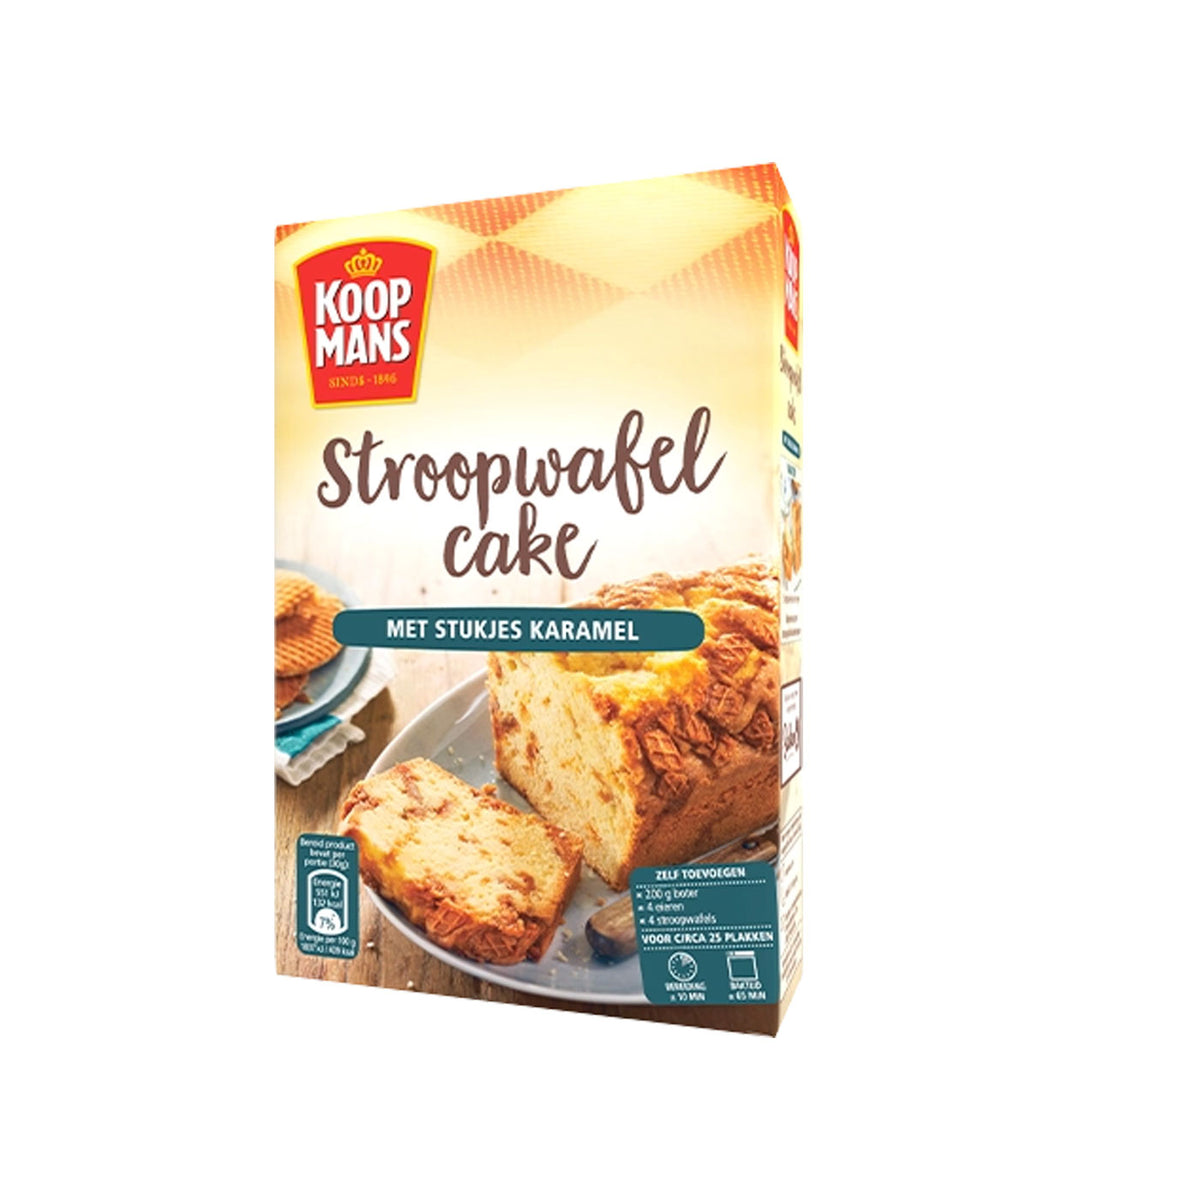 Stroopwafel Cake Mix - Image 3